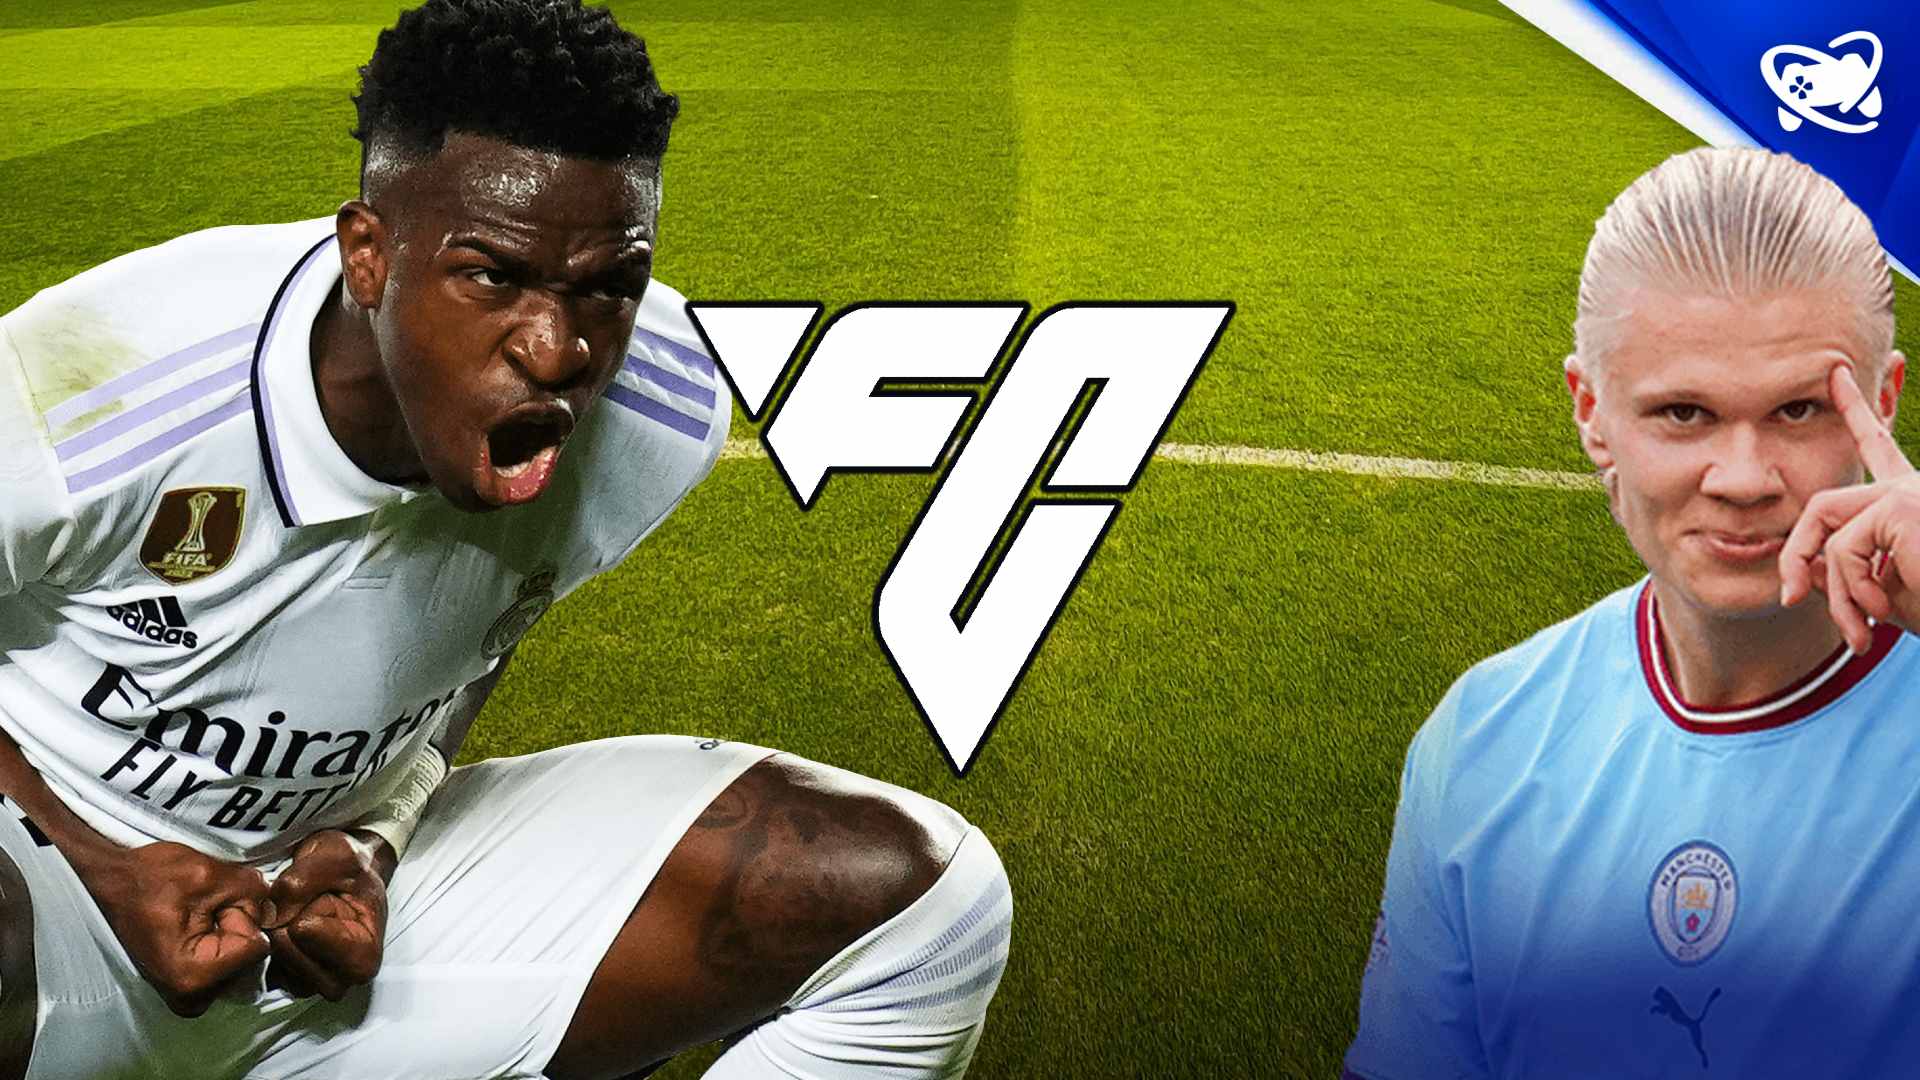 Rumor sugere Modo Carreira online no EA Sports FC